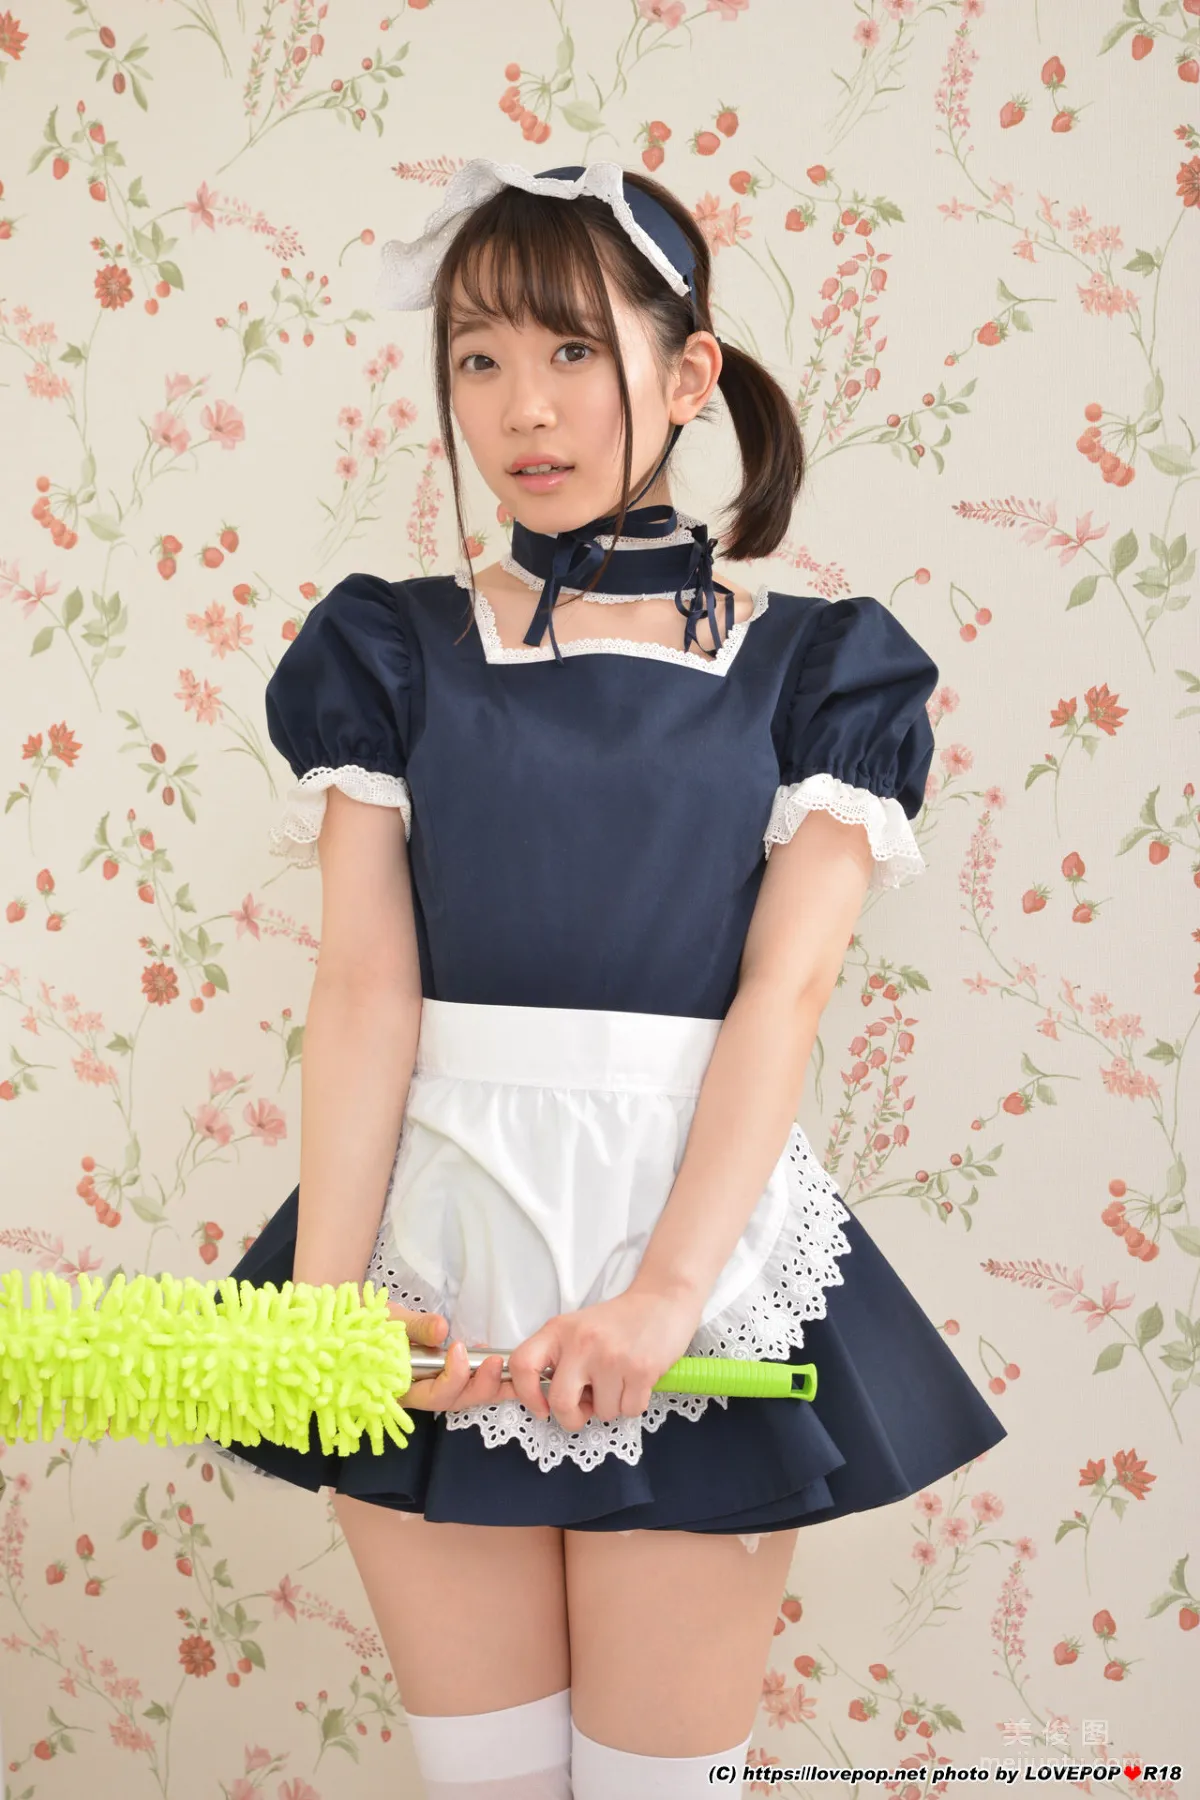 [LOVEPOP] Special Maid Collection - 架乃由罗/架乃ゆら Photoset 039